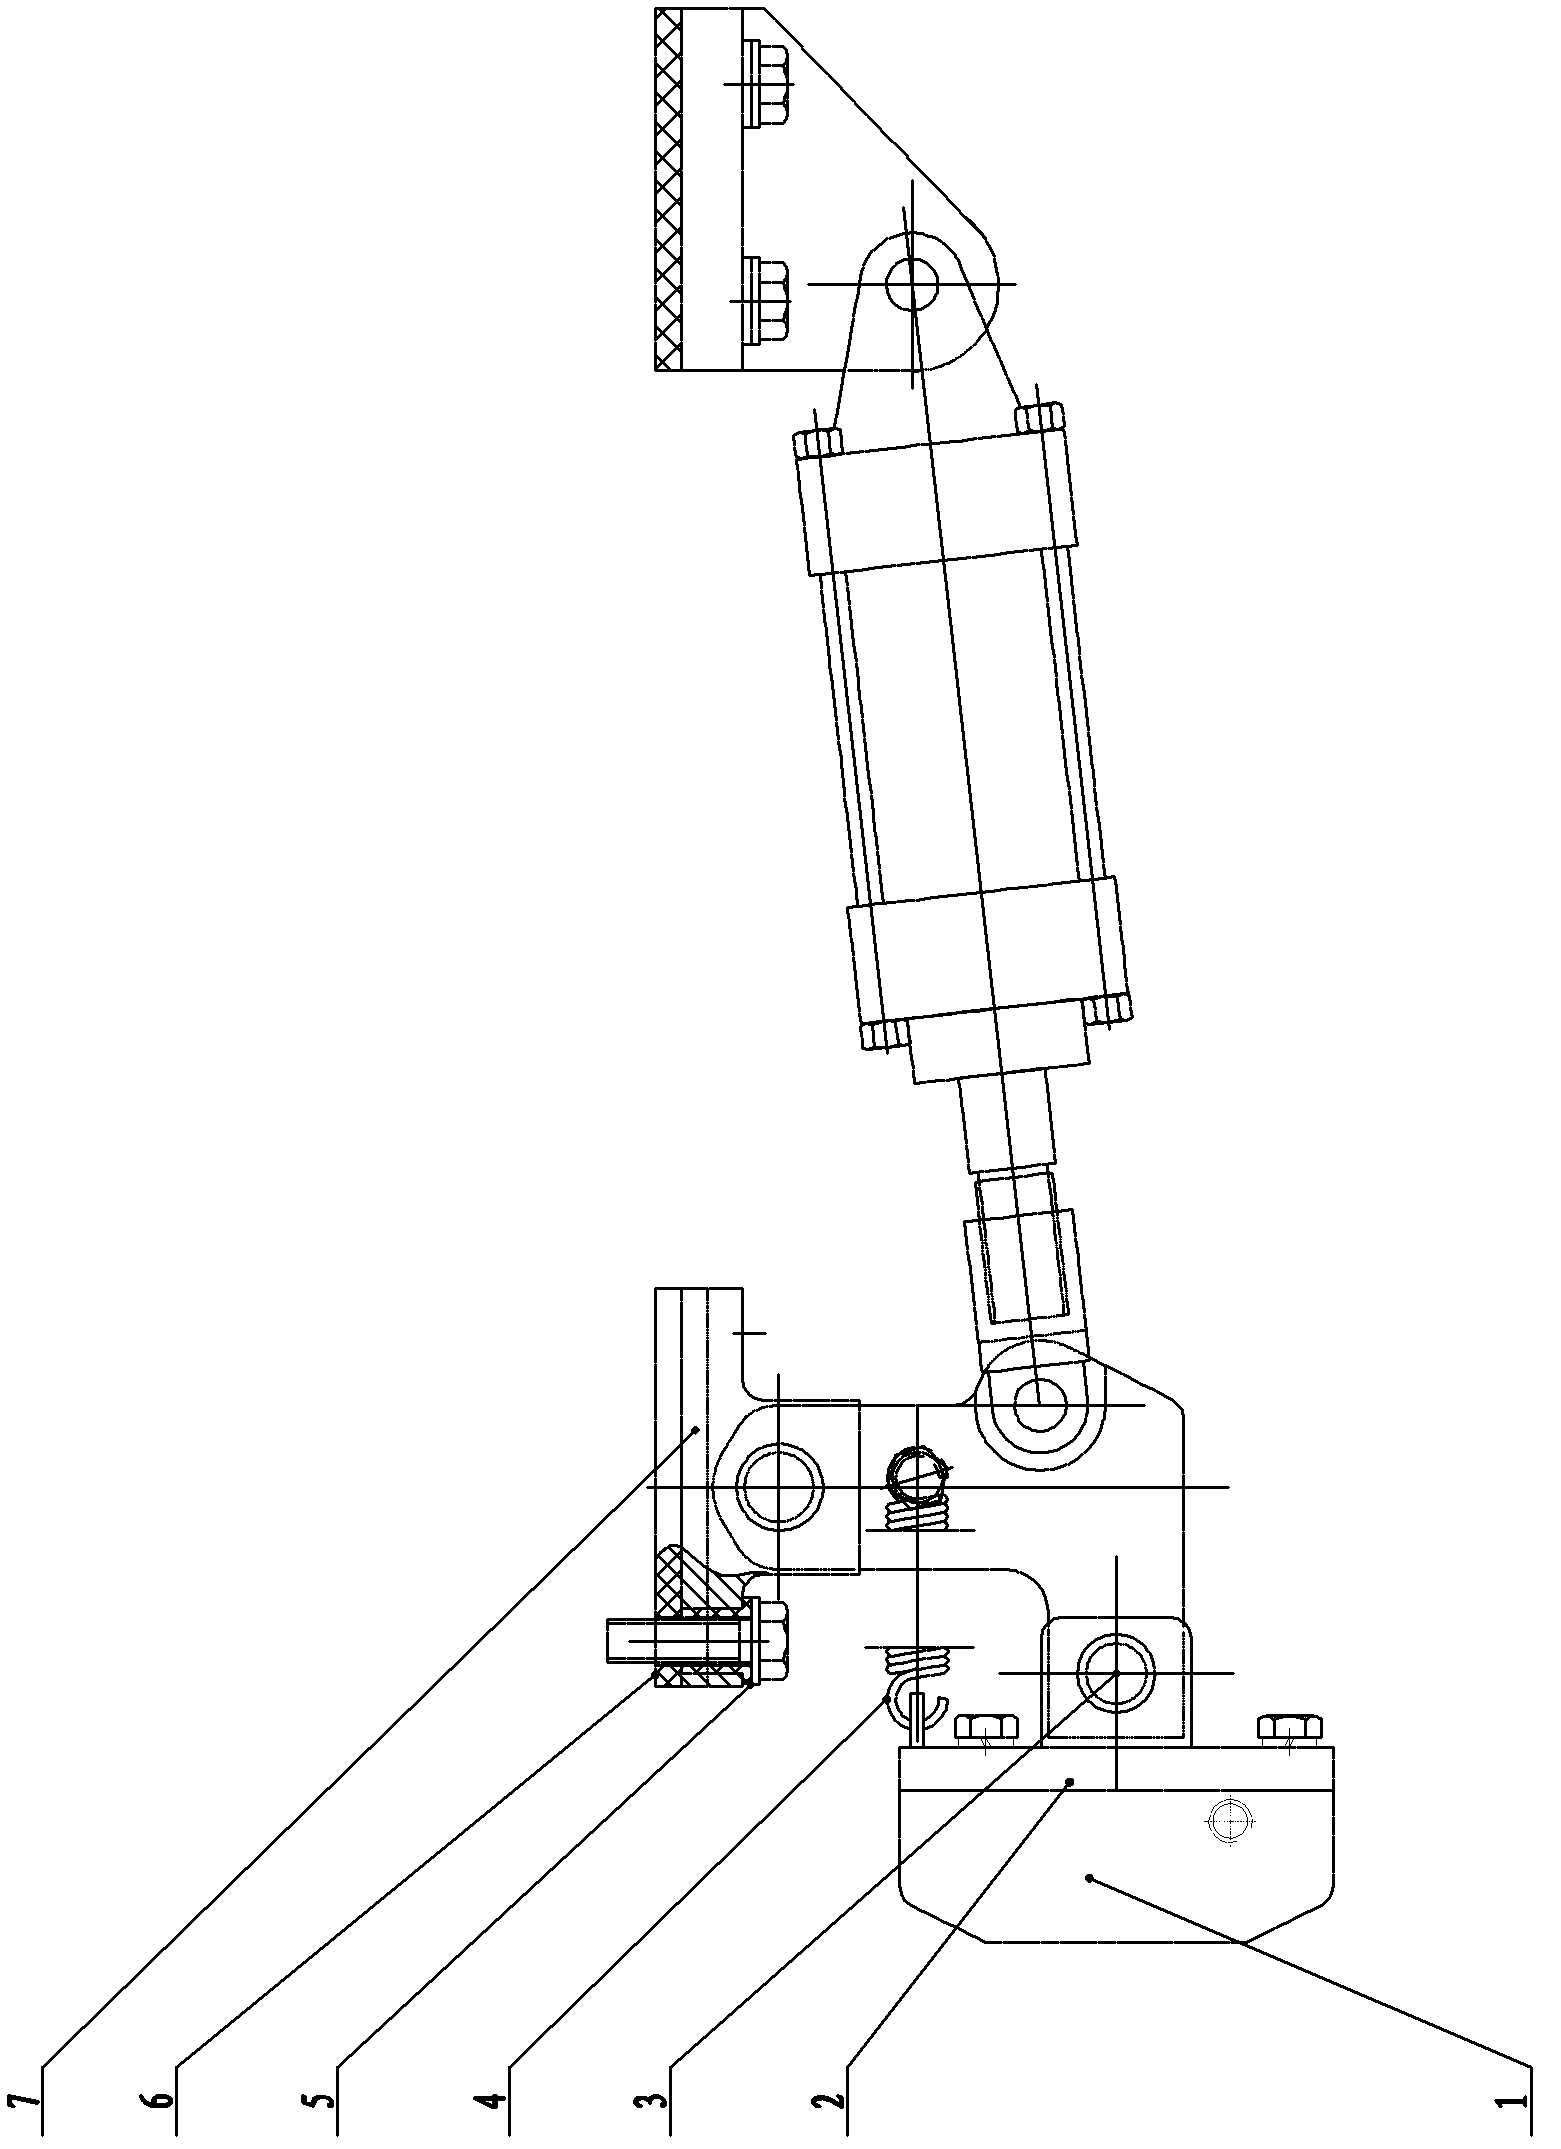 H-type steel horizontal assembly welding grounding mechanism